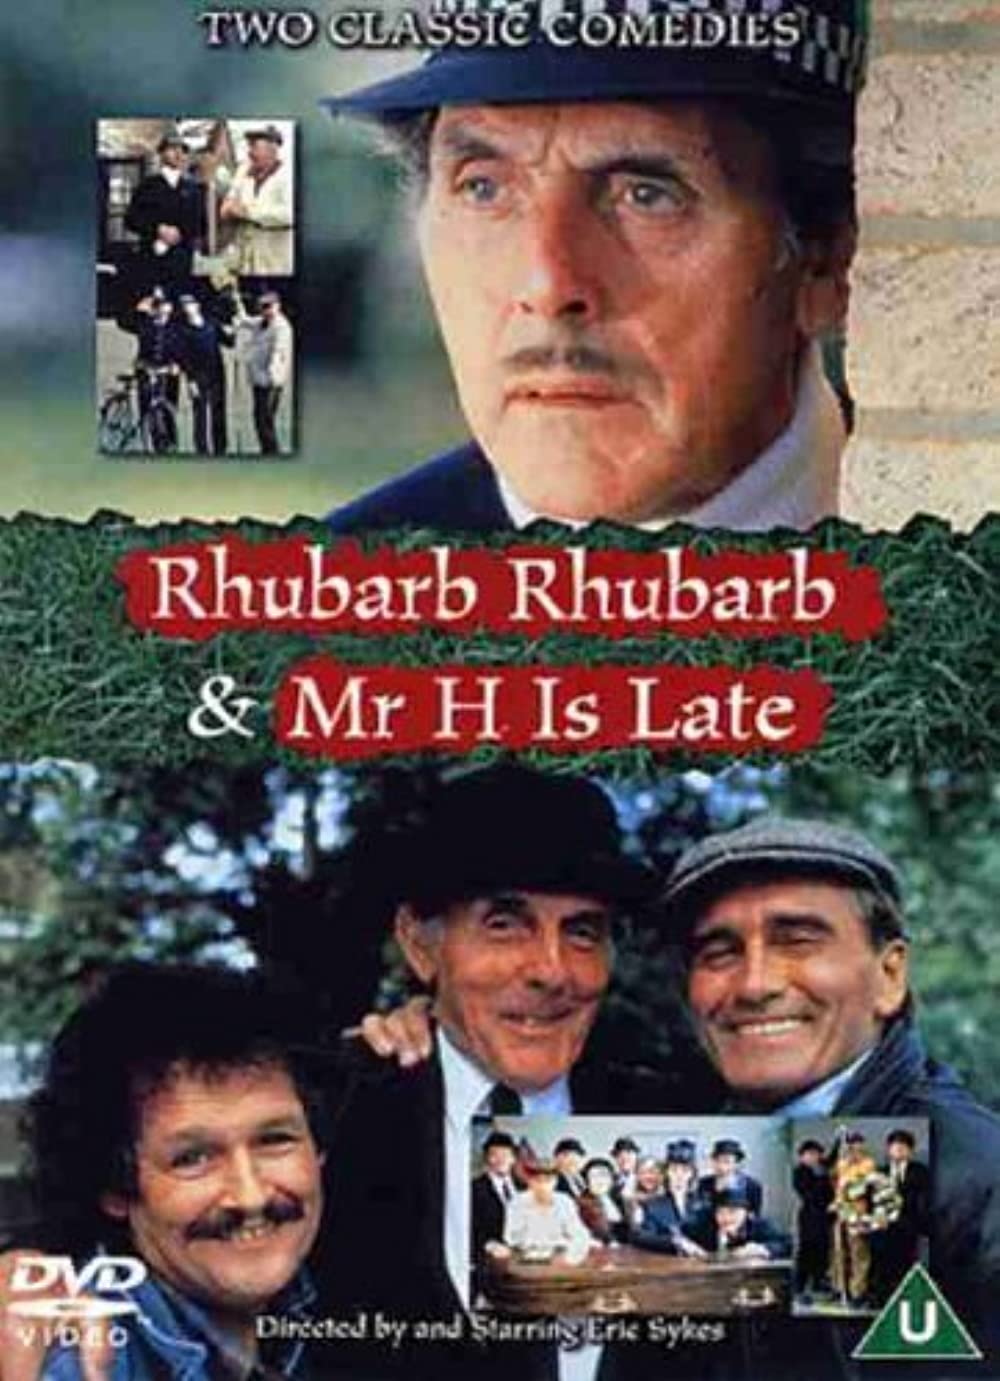 Eric Sykes - Rhubarb Rhubarb and Mr H is Late (DVD5)